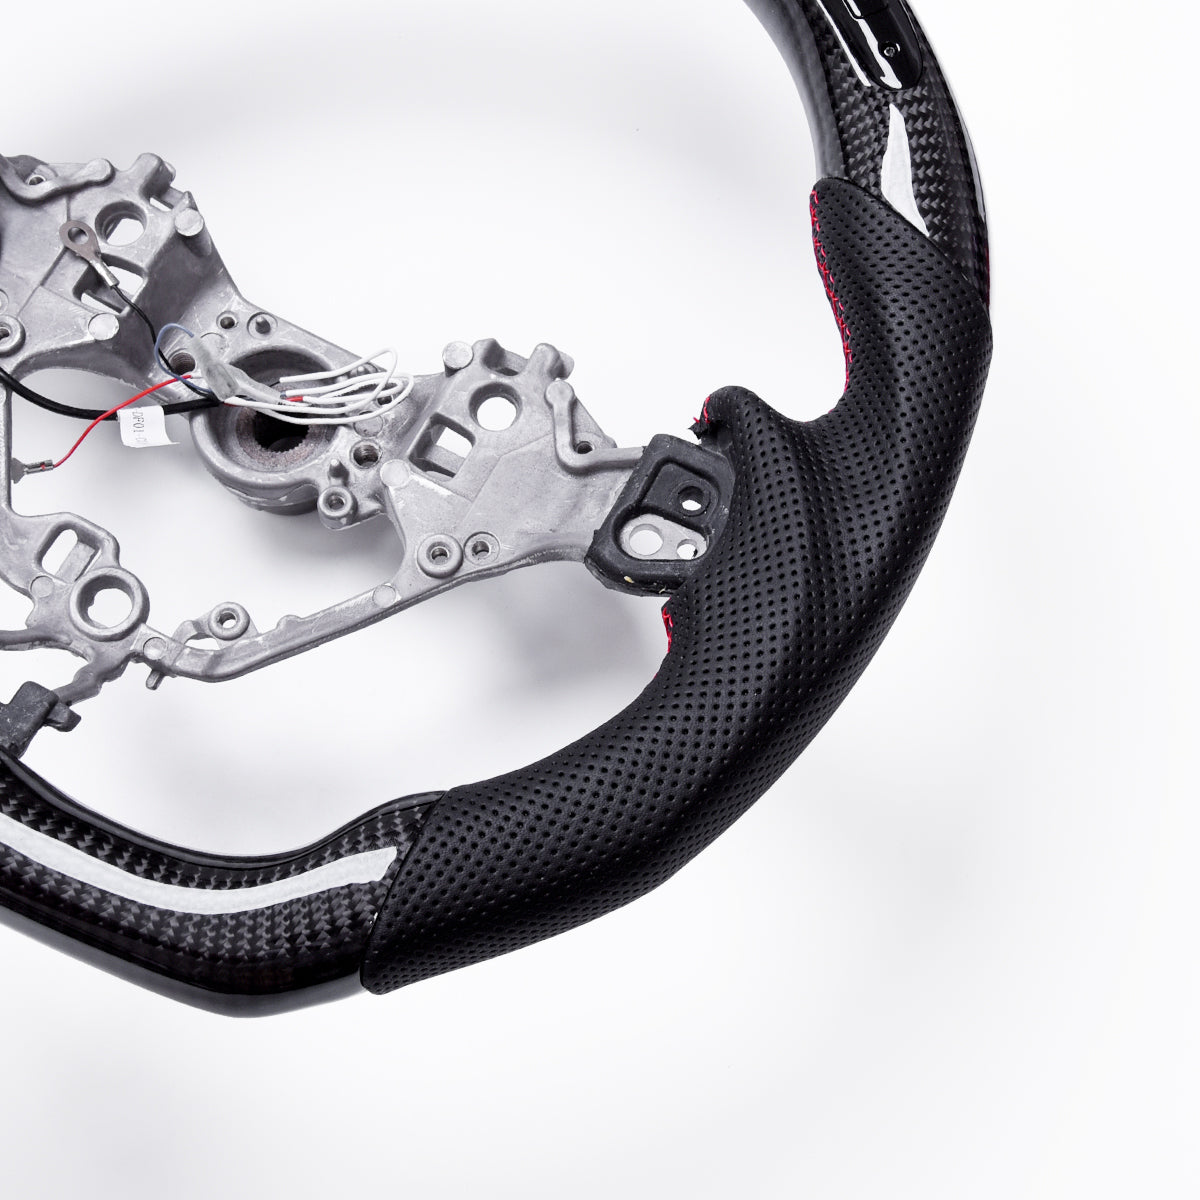 Revolve Carbon Fiber LED Steering Wheel | Subaru BRZ/ Toyota 86 2017-2020 - revolvesteering